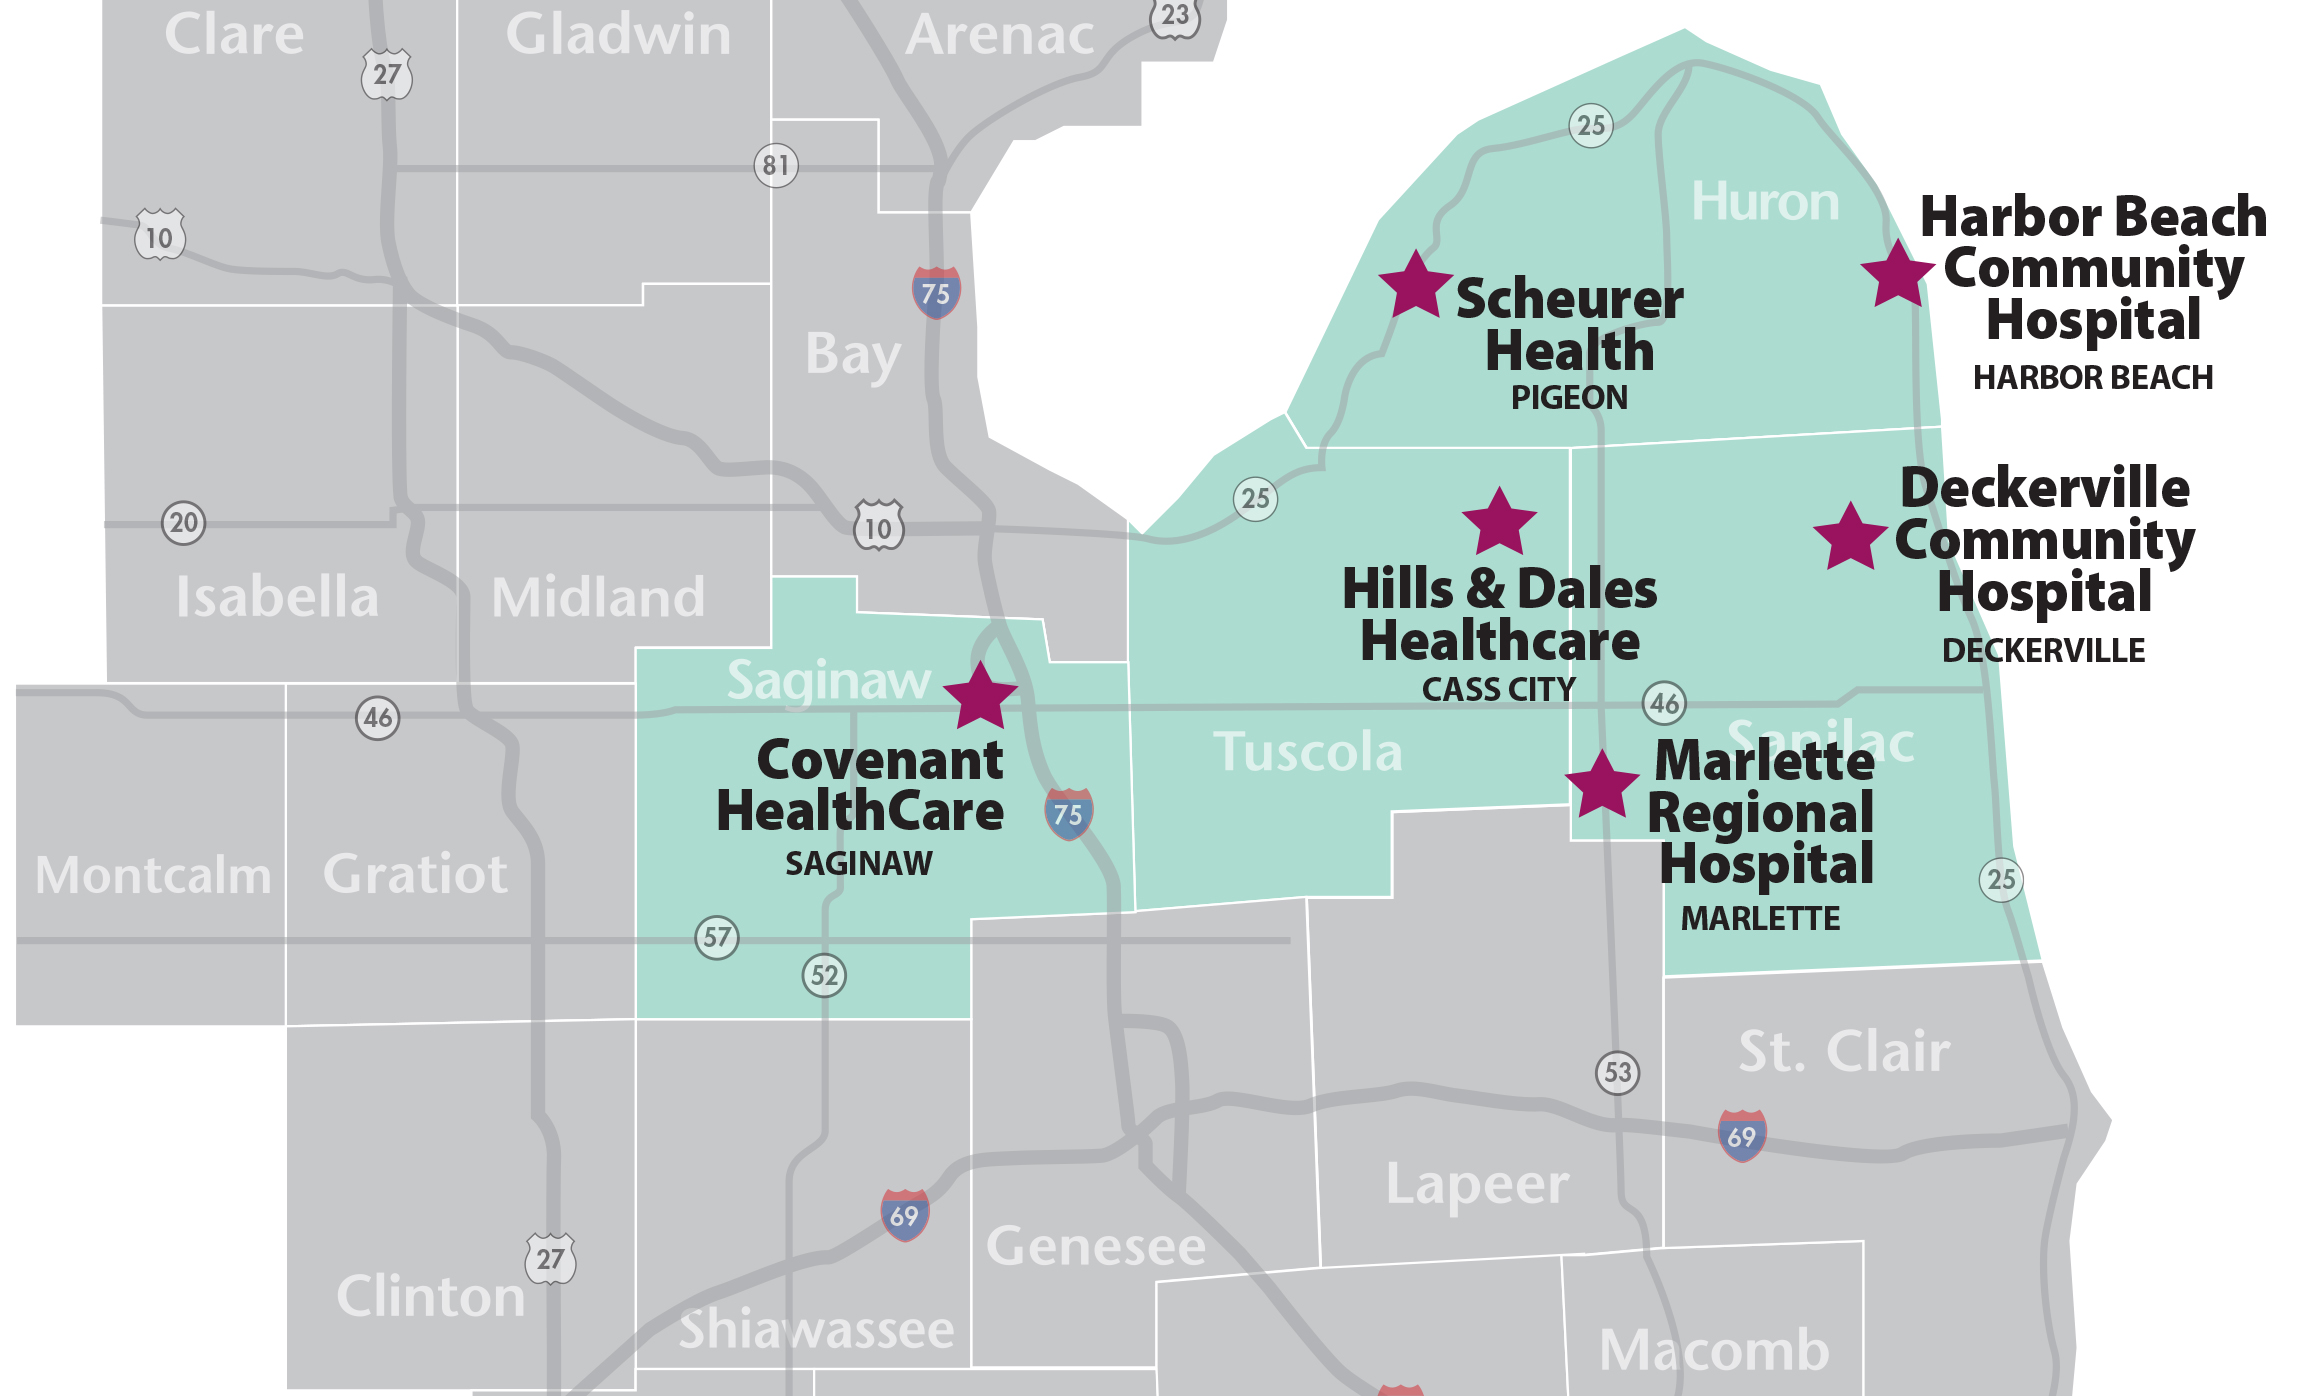 Covenant Regional Thumb Network Hospitals on Map